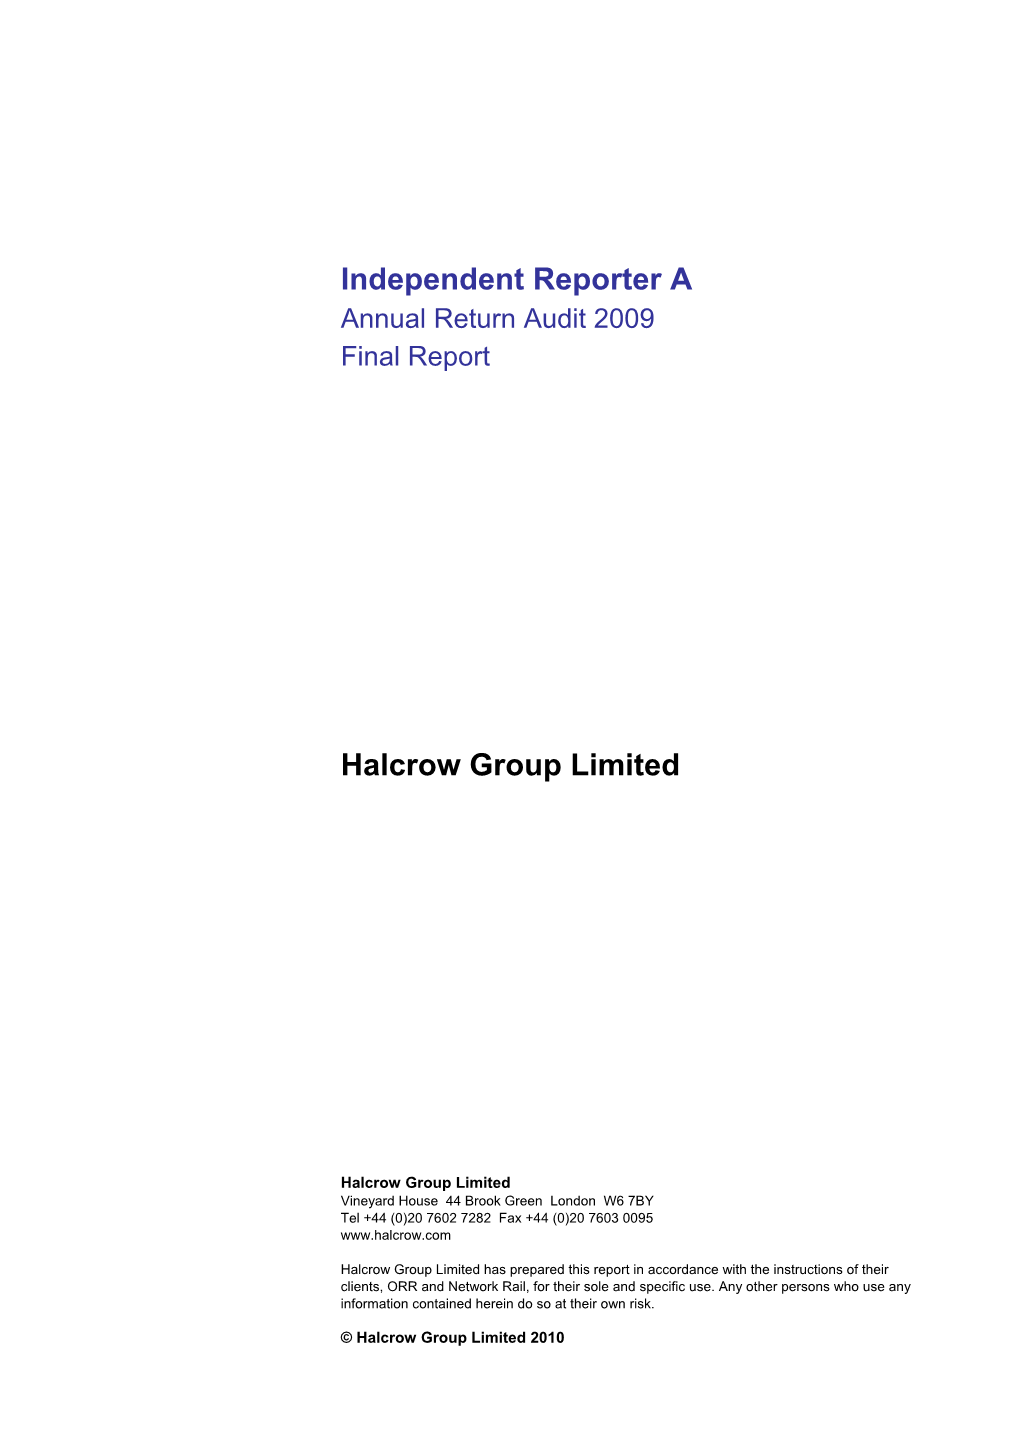 Annual Return Audit 2009 Final Report